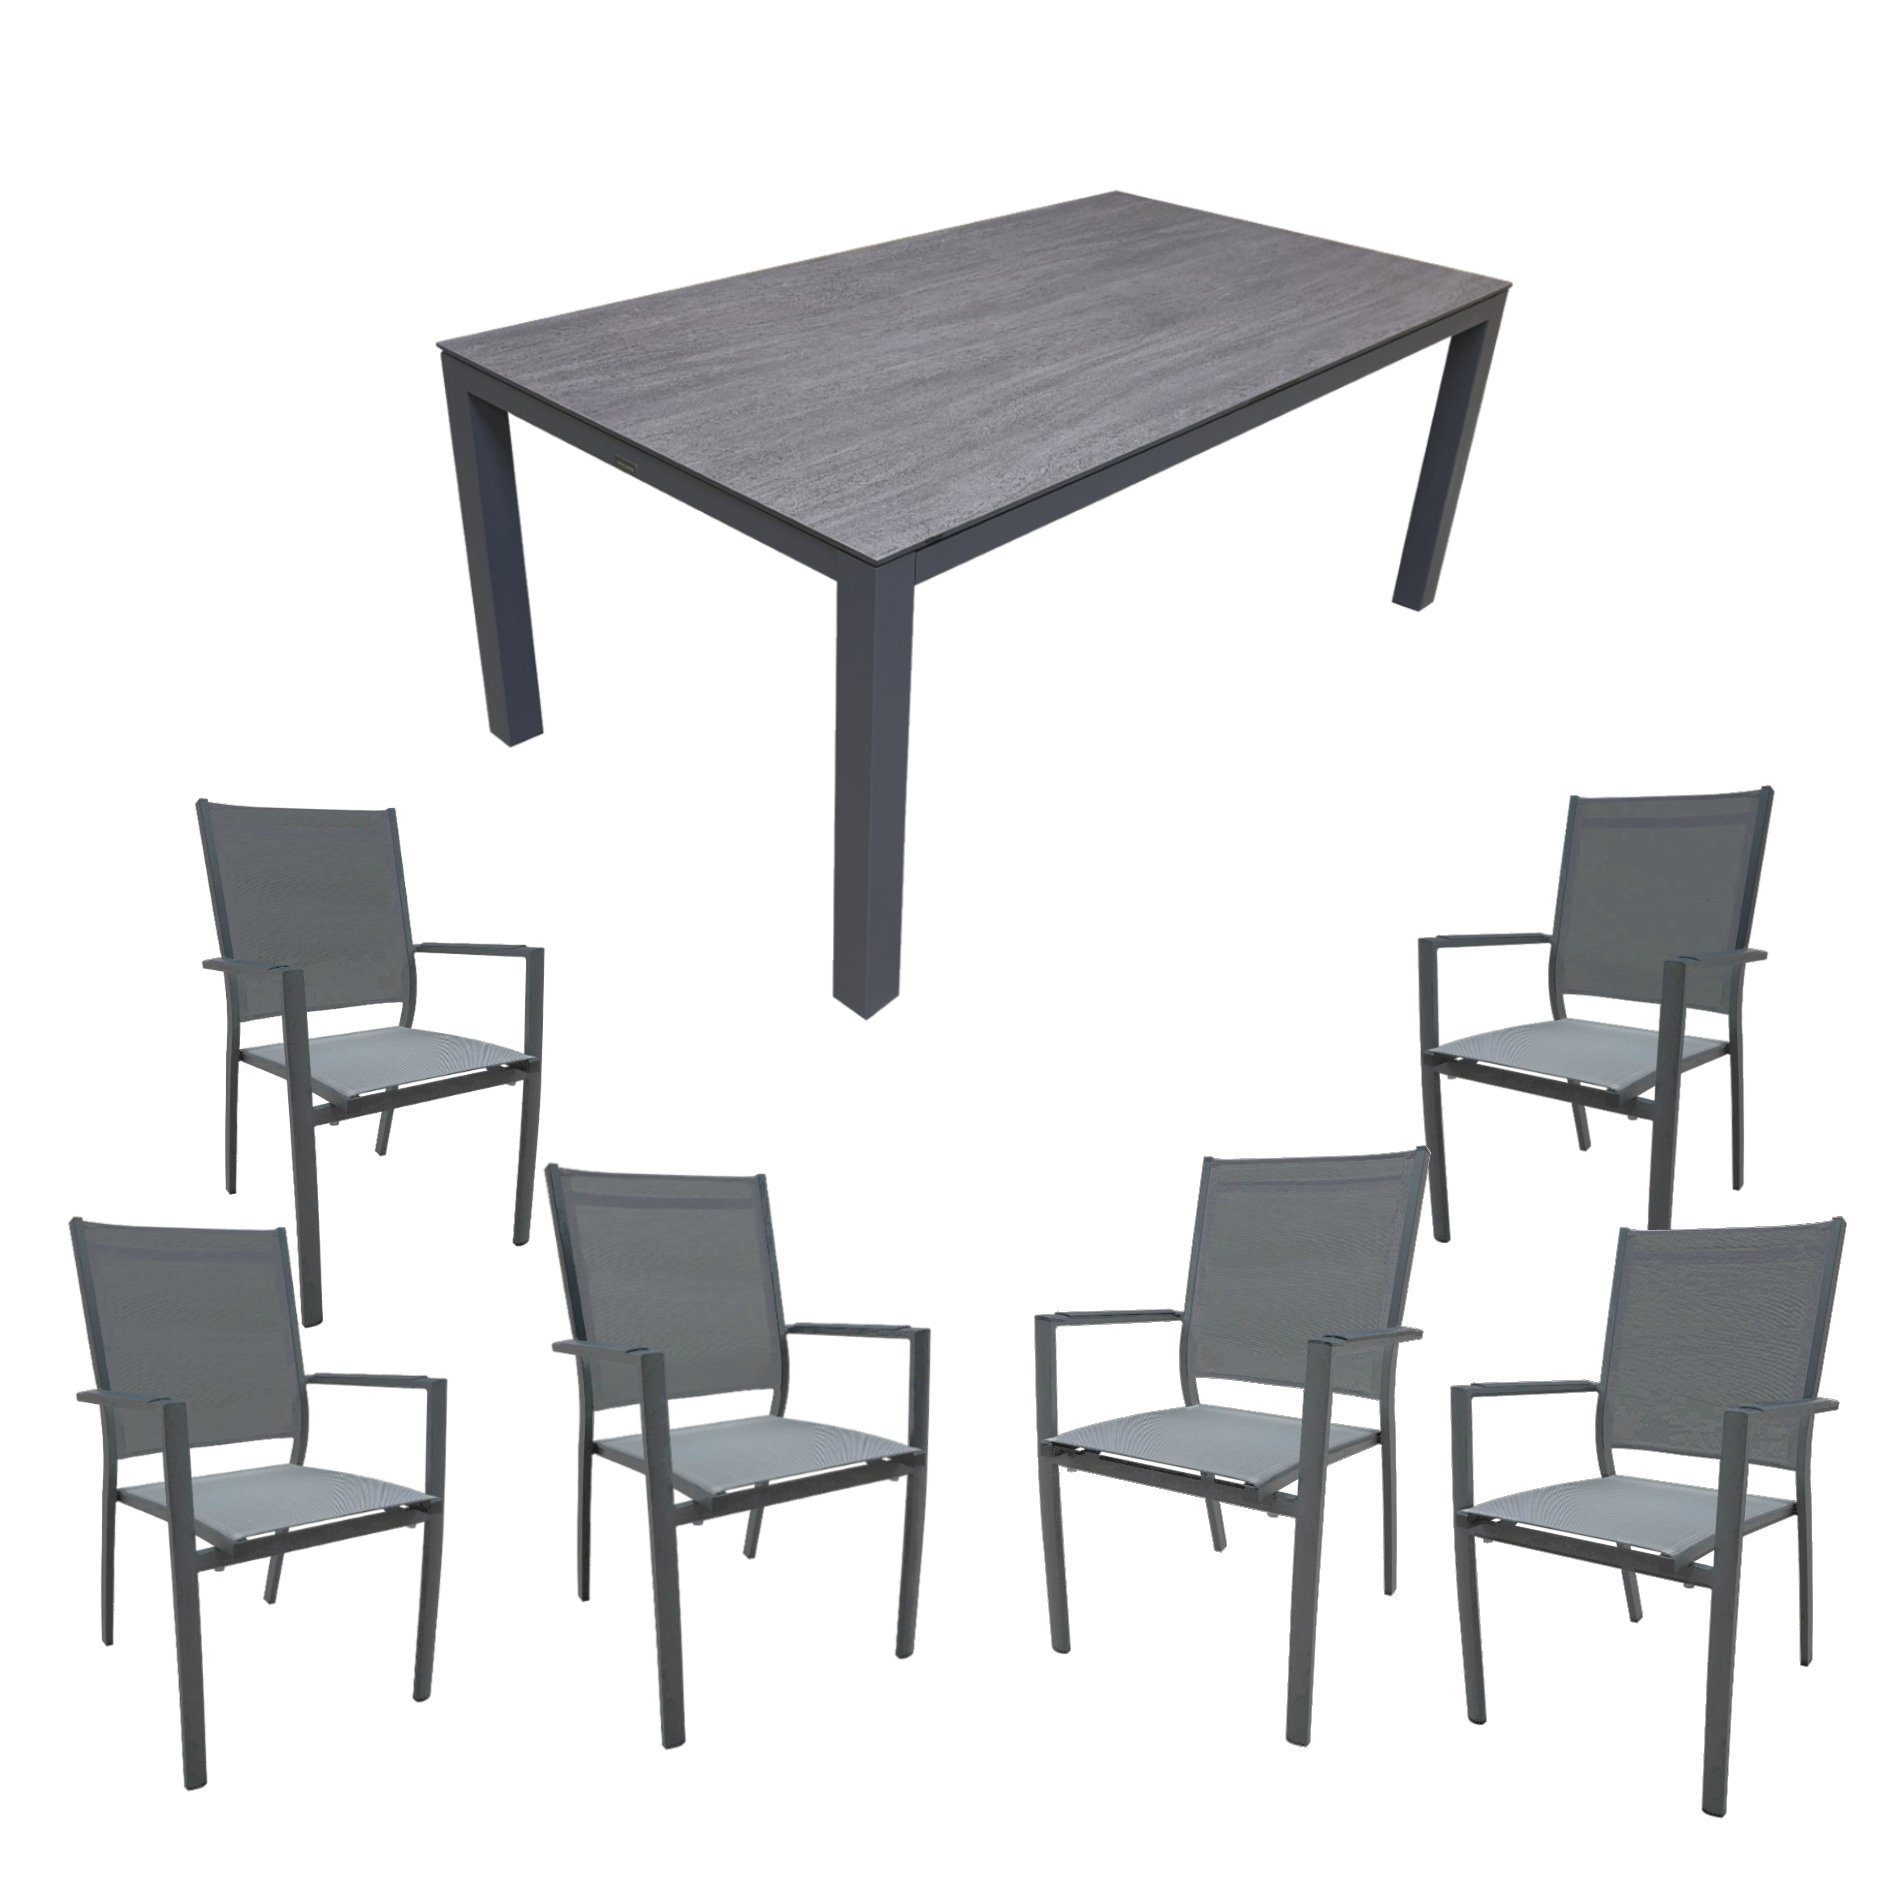 Home Islands Gartenmöbel-Set mit Tisch "Dayann" & Stapelsessel "Yuri", Gestelle Aluminium charcoal, Tischplatte HPL dark grey, Textilgewebe silver black